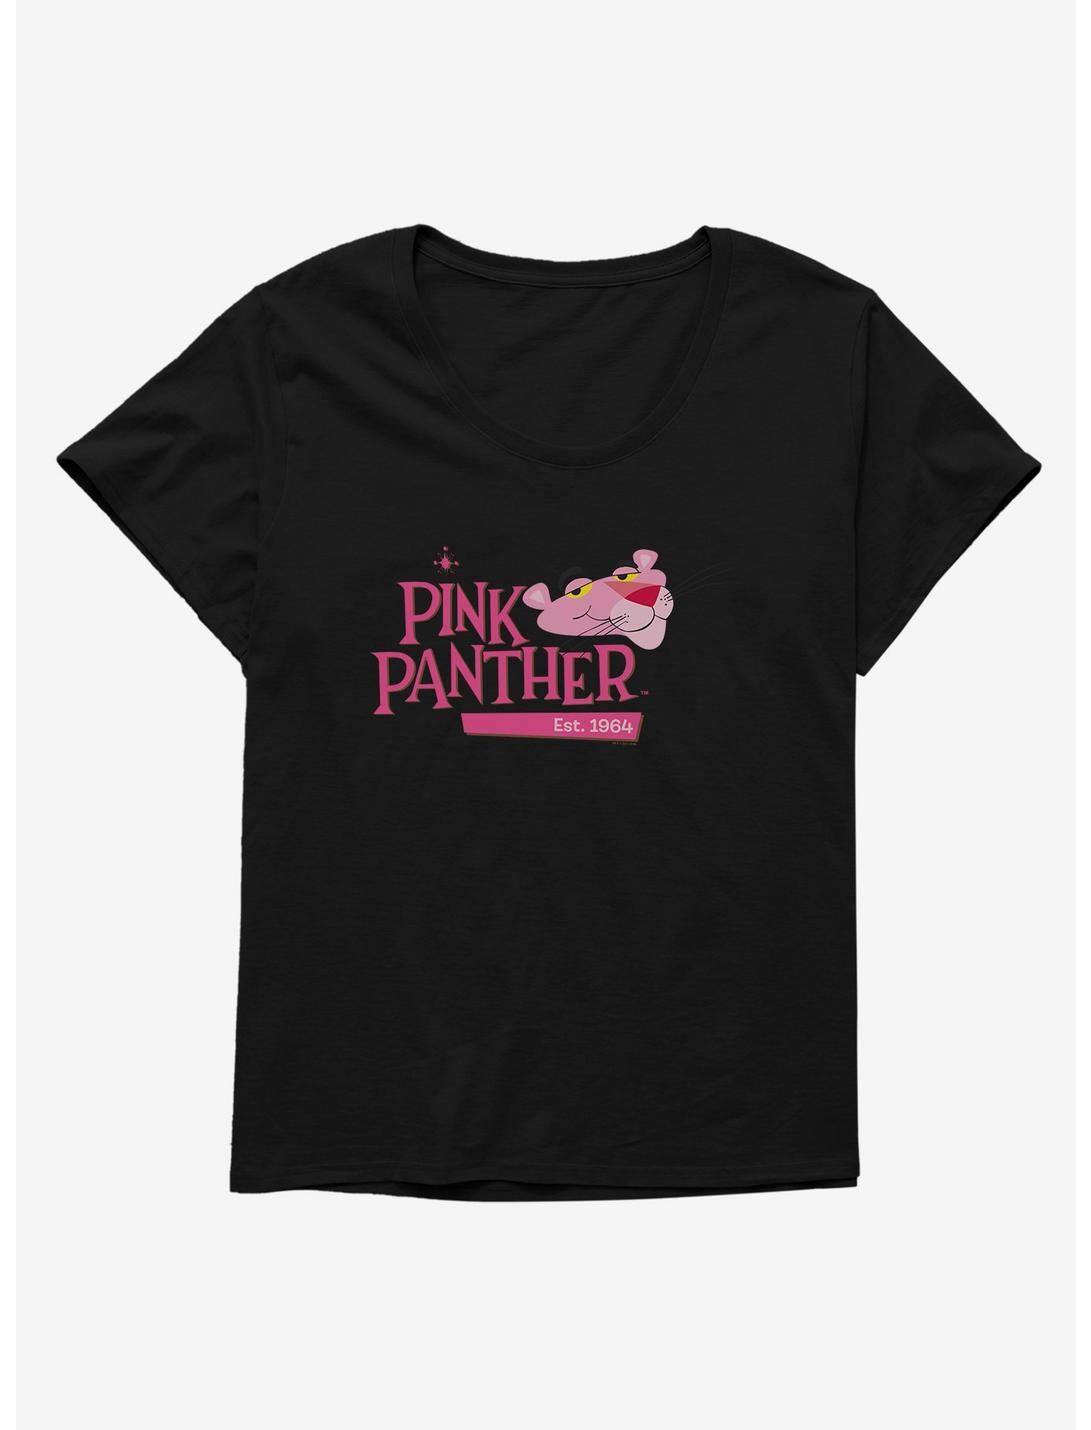 Pink Panther Est 1964 Womens T-Shirt Plus Size, , hi-res